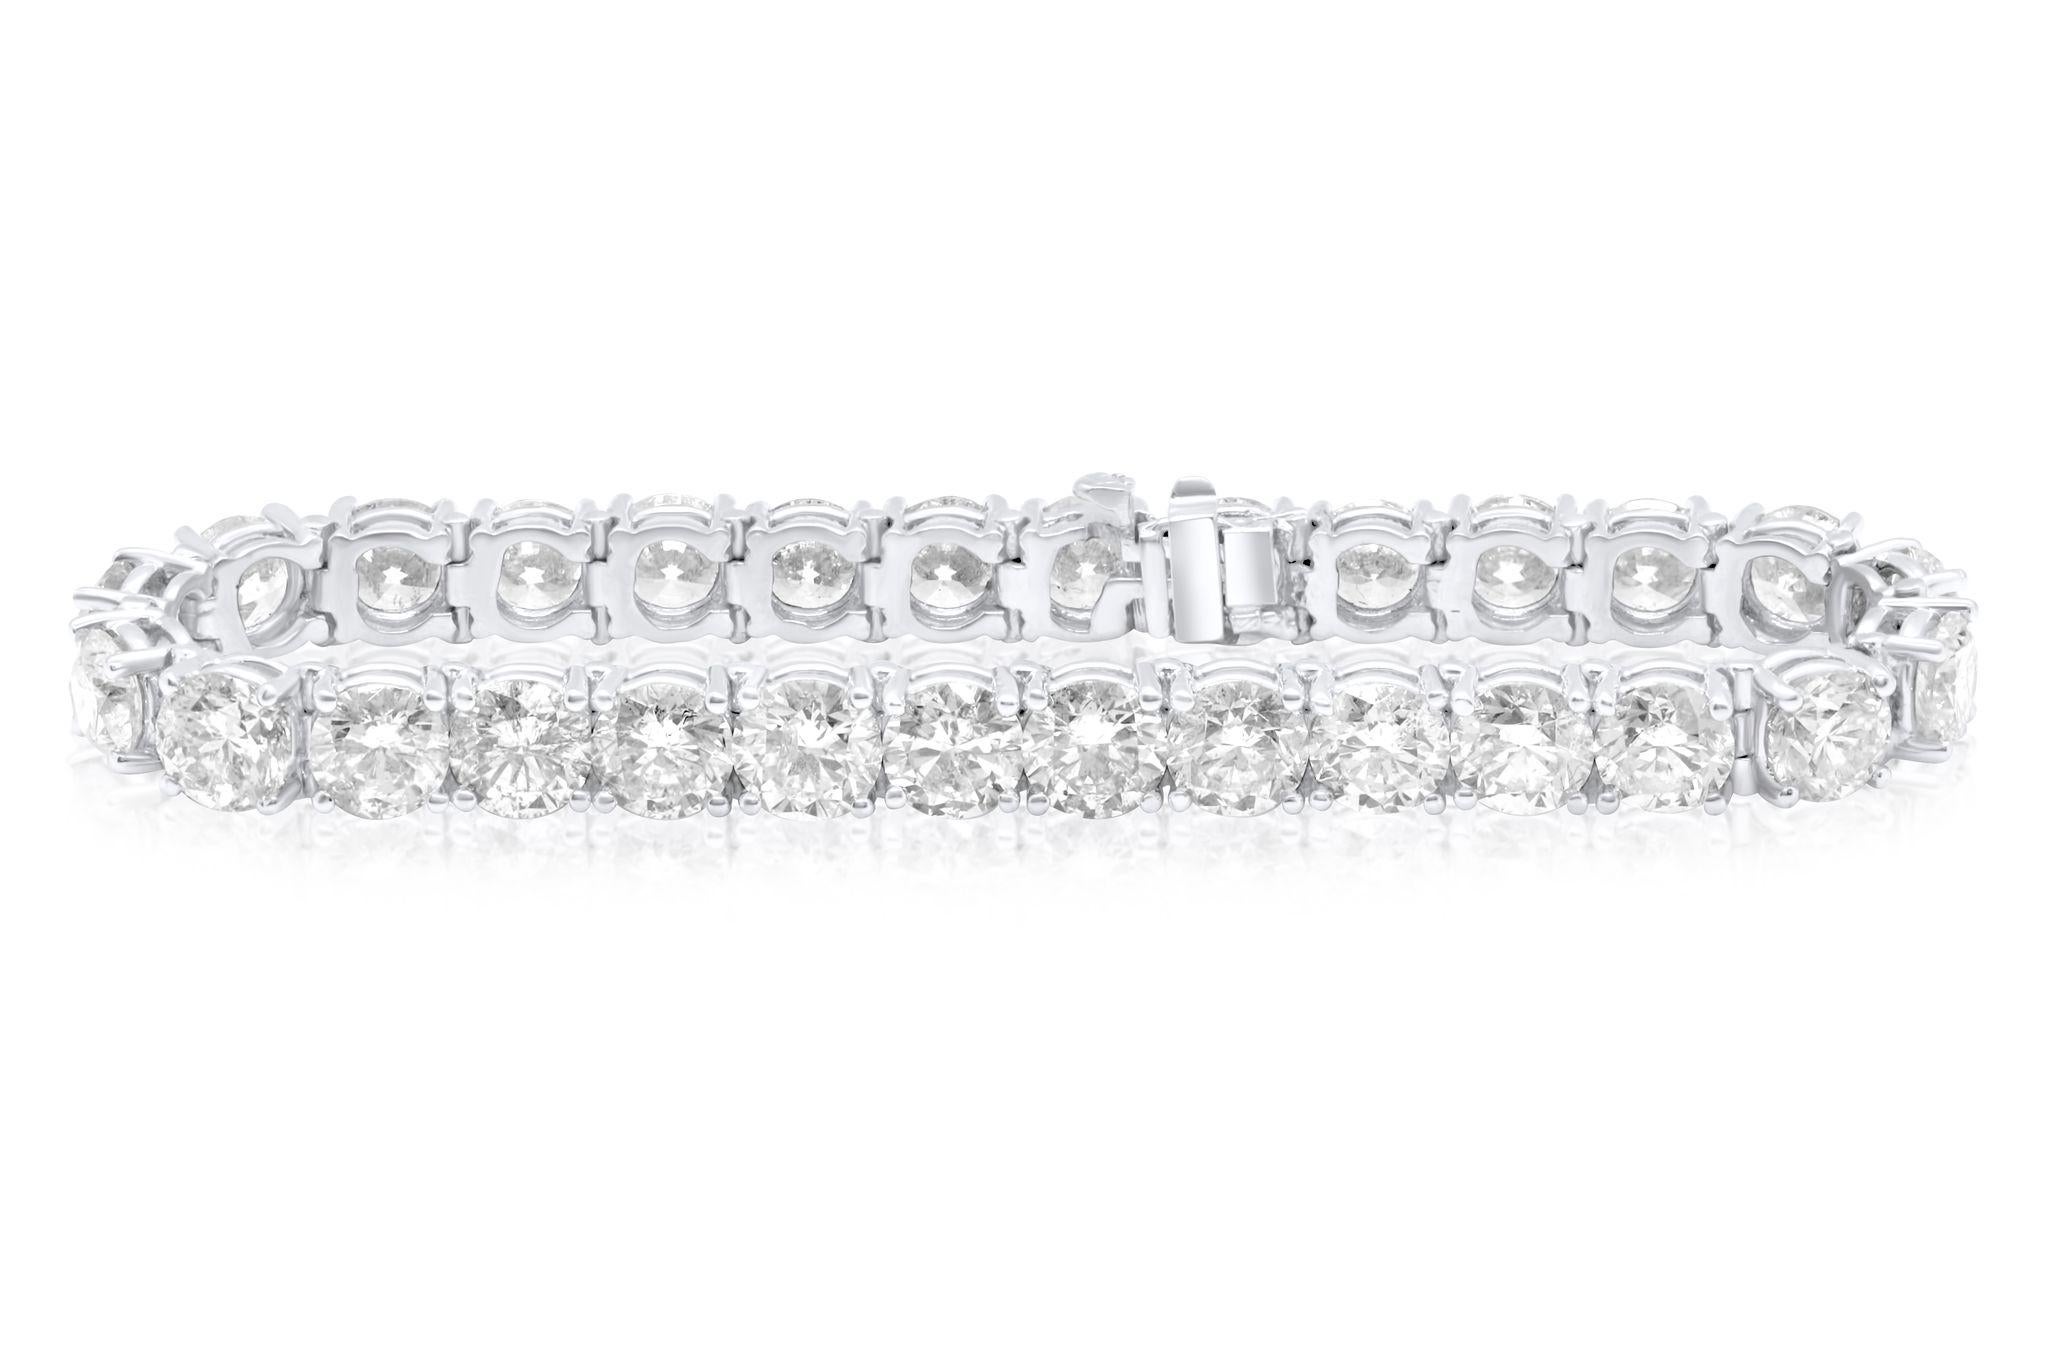 18 kt Custom white gold 4 prong diamond tennis bracelet 21.68 cts round diamonds 0.72 each carat 30 stones  FG color SI clarity.  Excellent Cut.